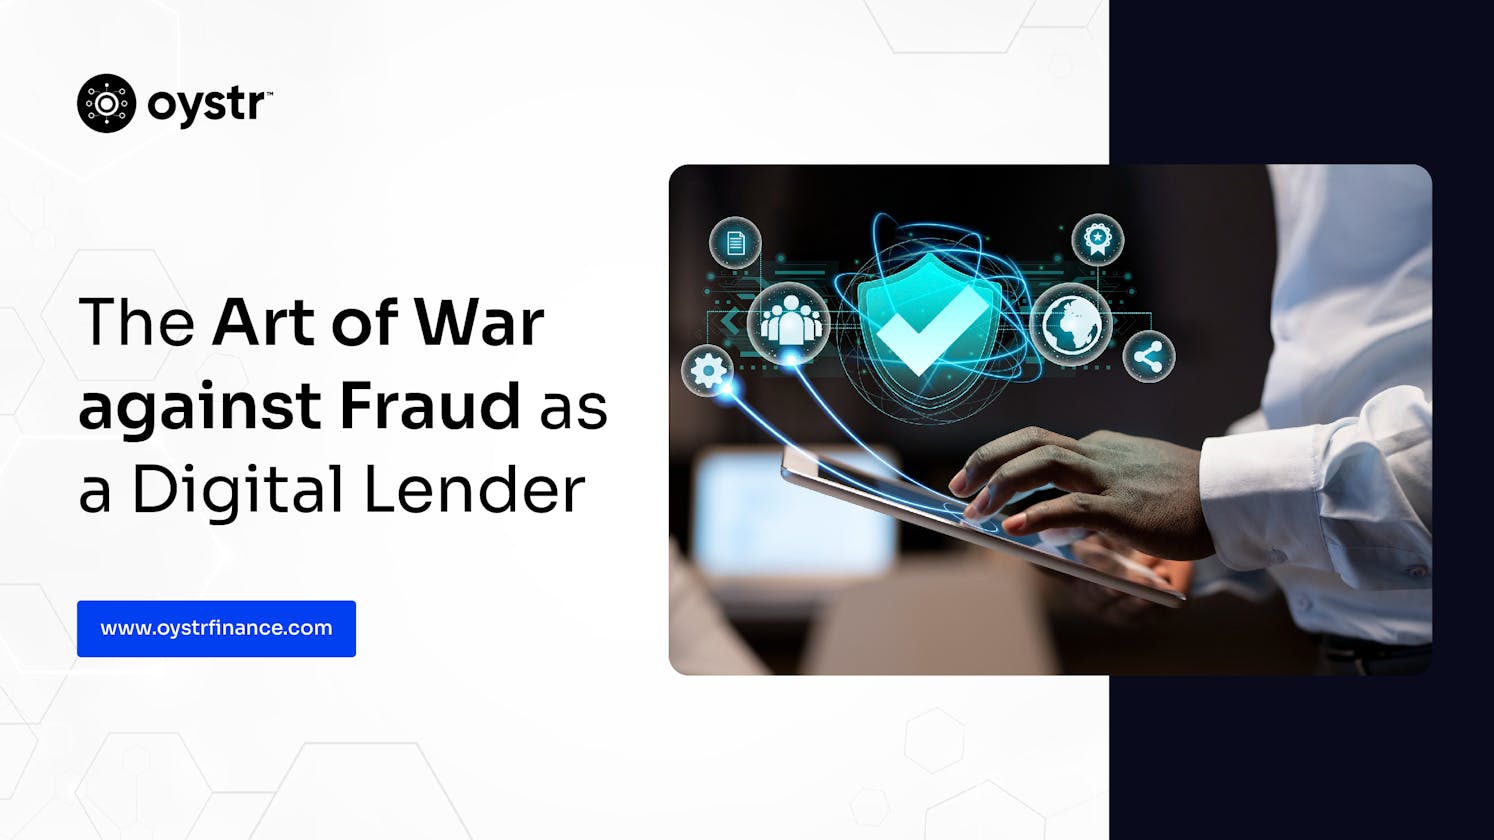 The Art of War against Fraud as a Digital Lender